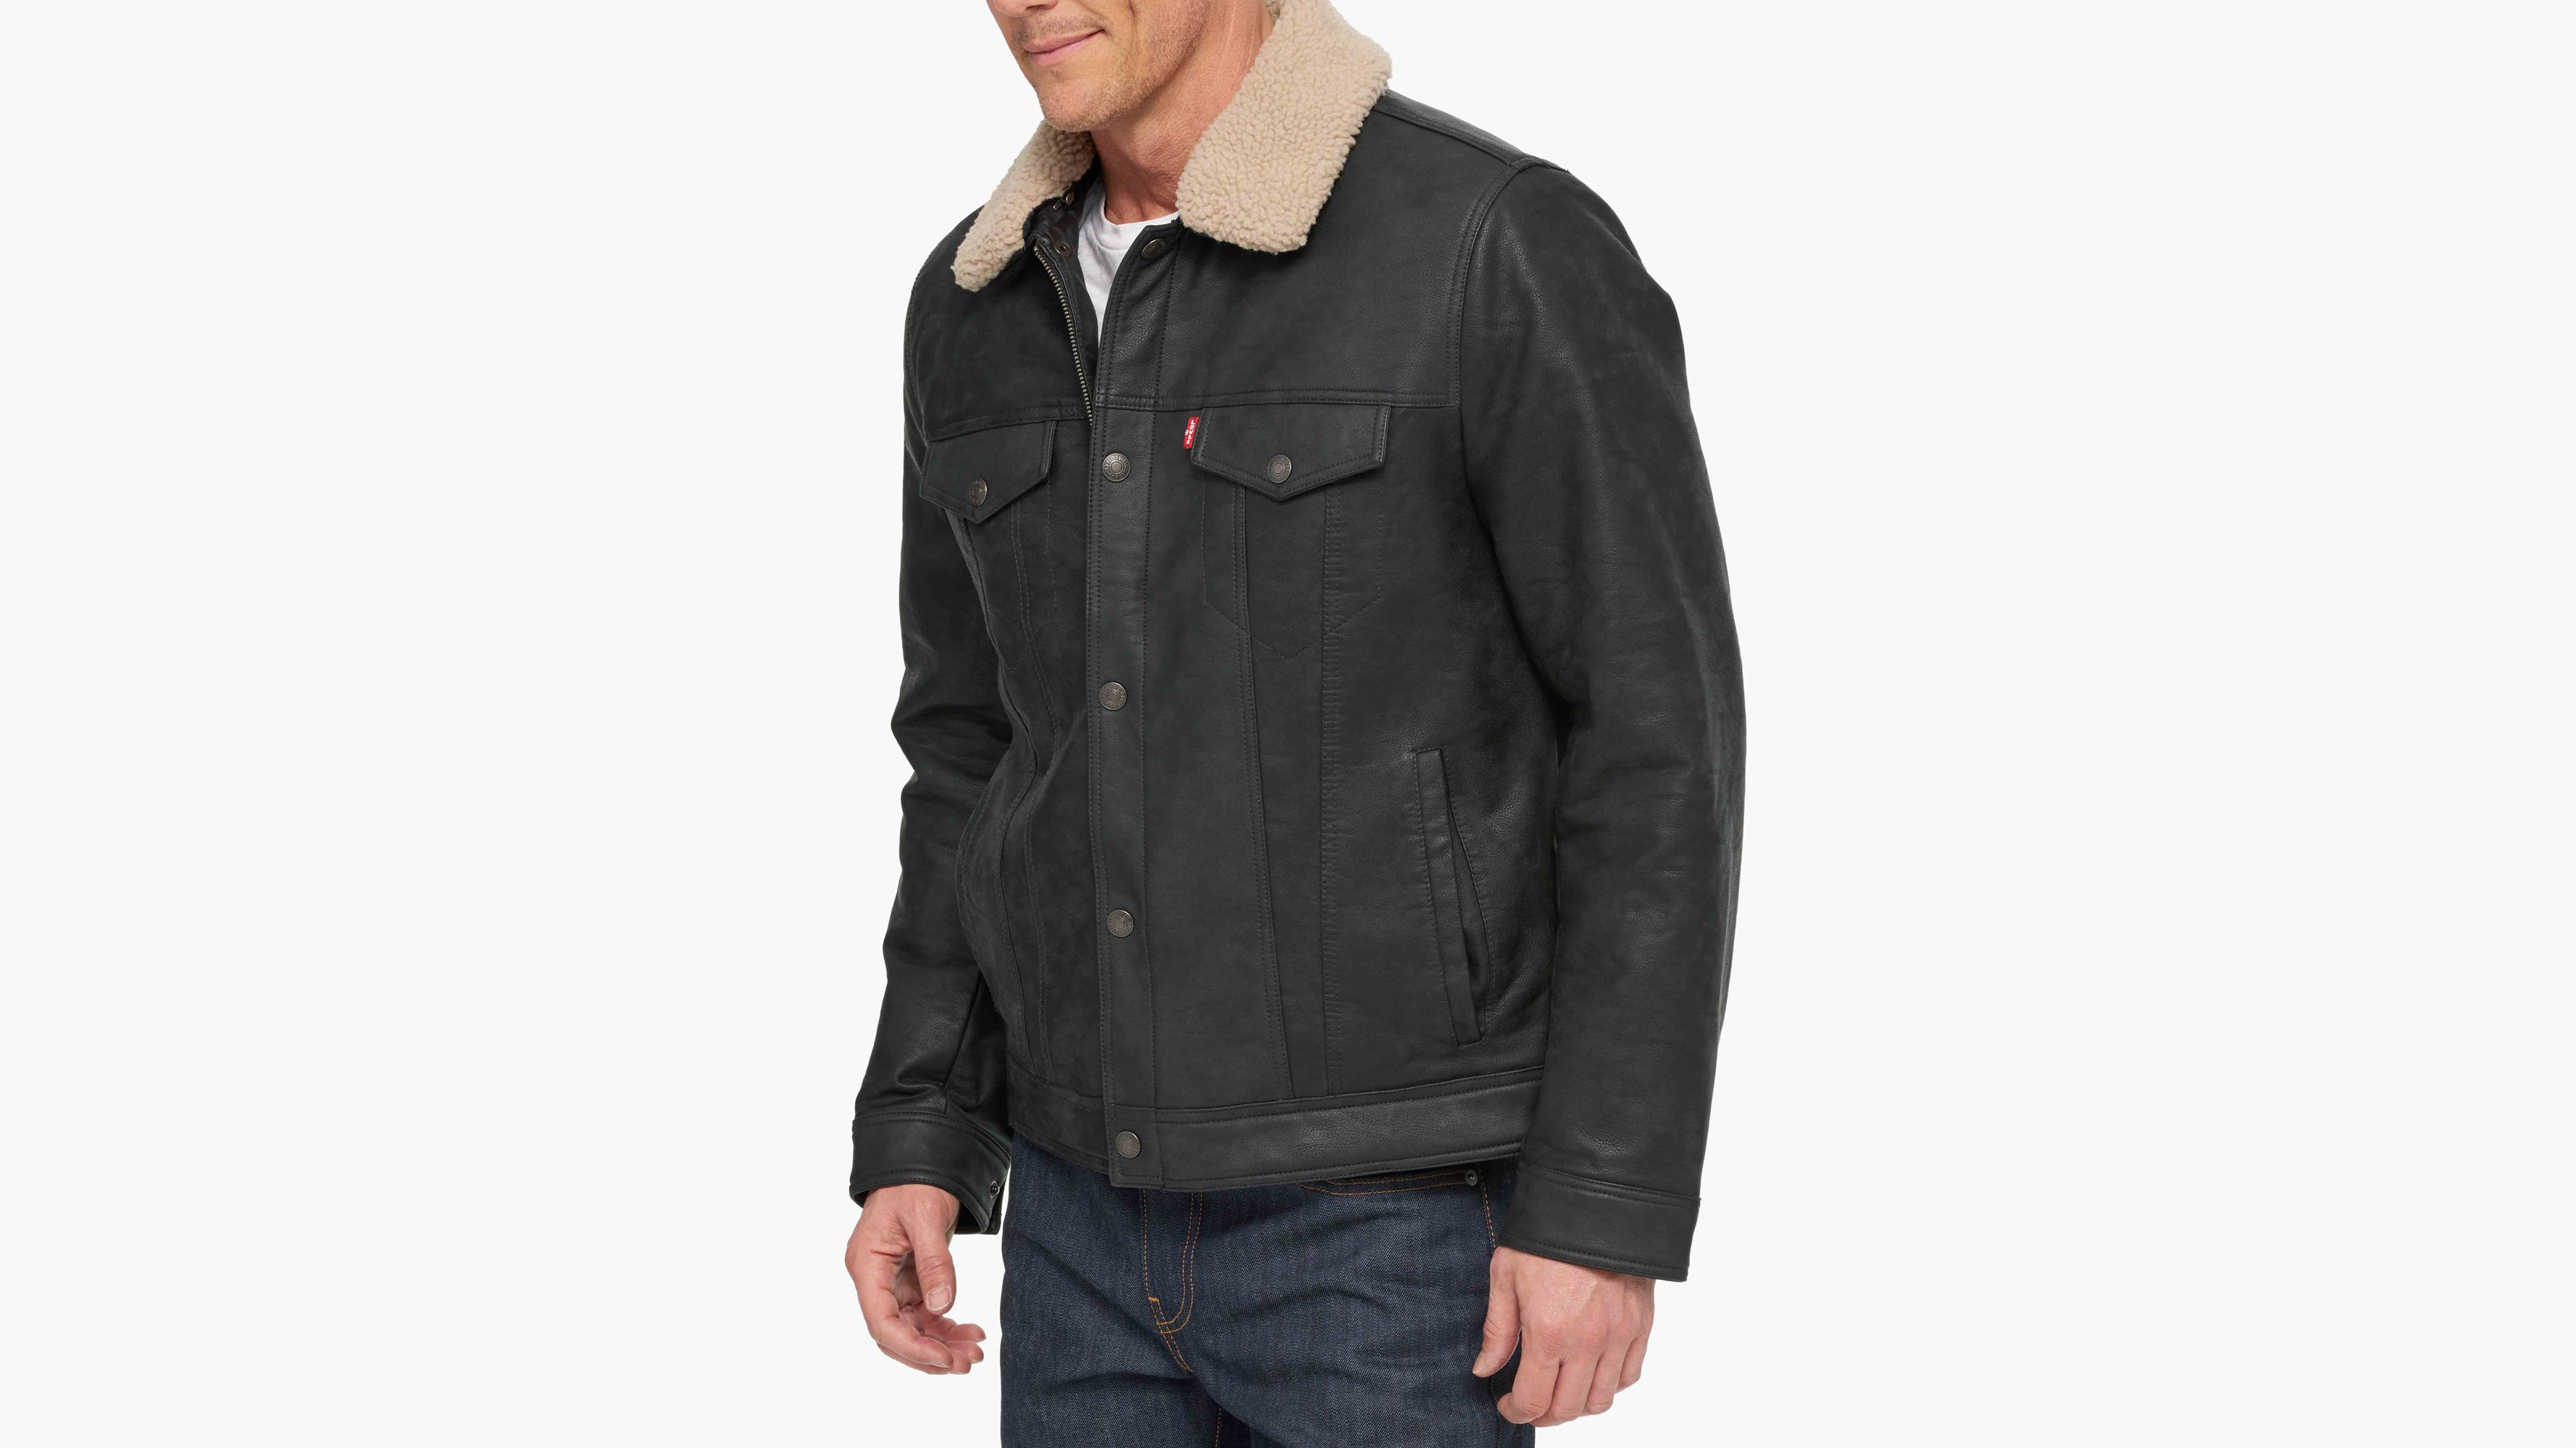 levis sherpa leather jacket